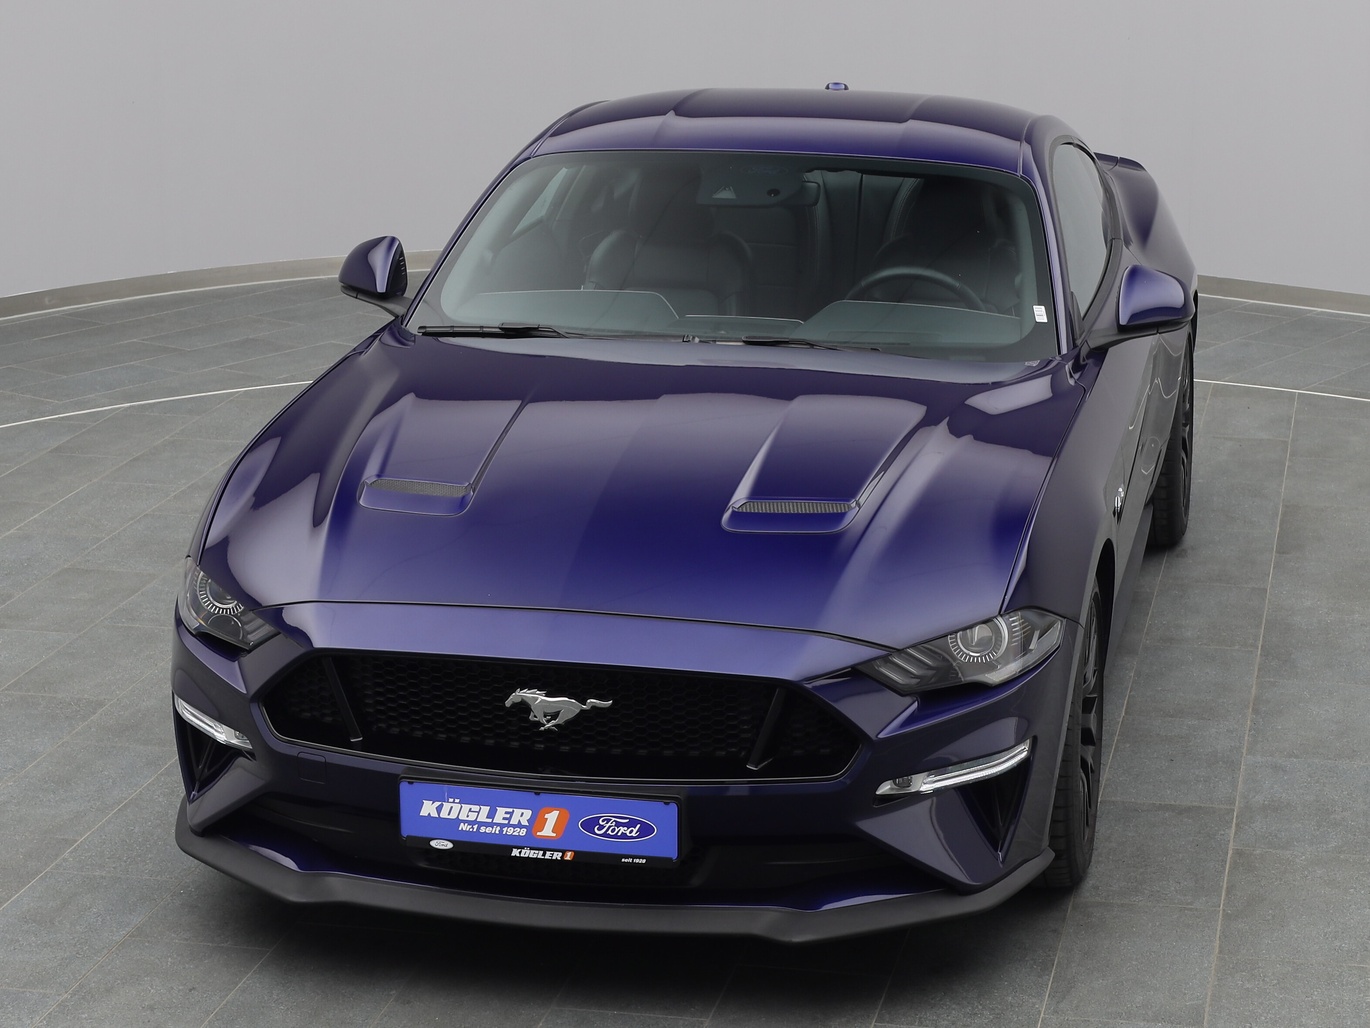  Ford Mustang GT Coupé V8 450PS Aut. / Premium-Paket 2 in Kona Blau 